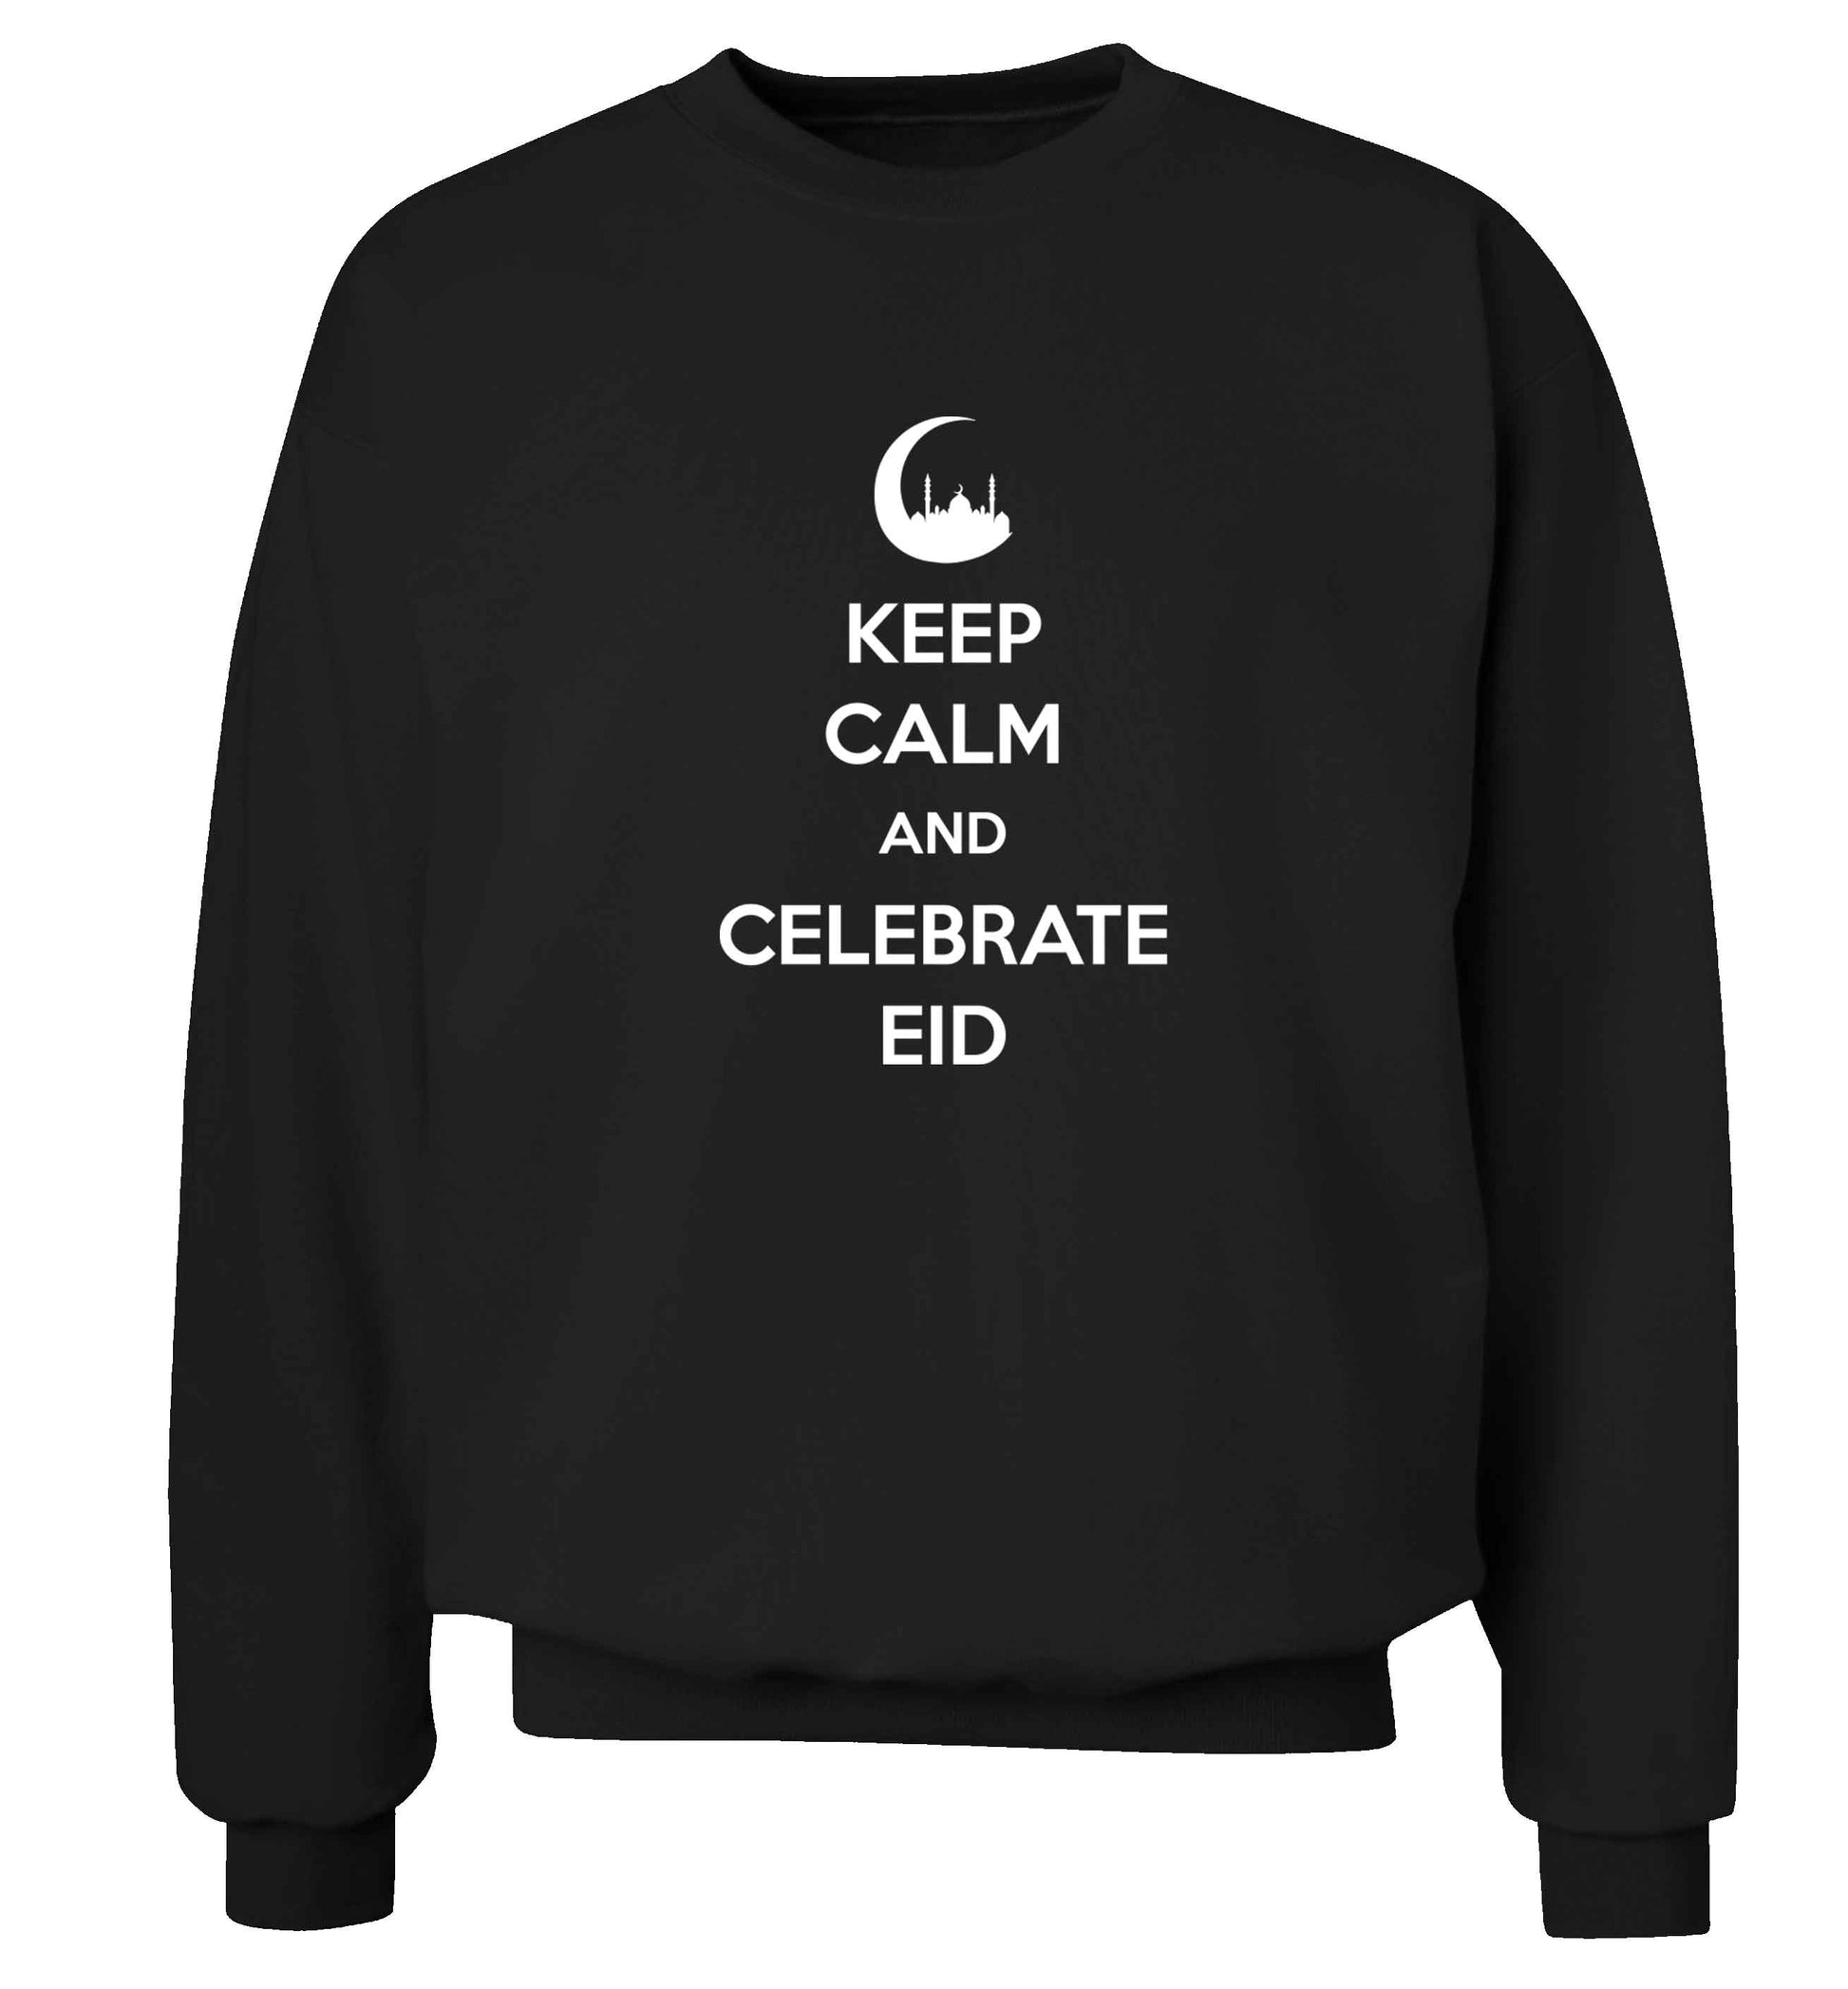 Keep calm and celebrate Eid adult's unisex black sweater 2XL